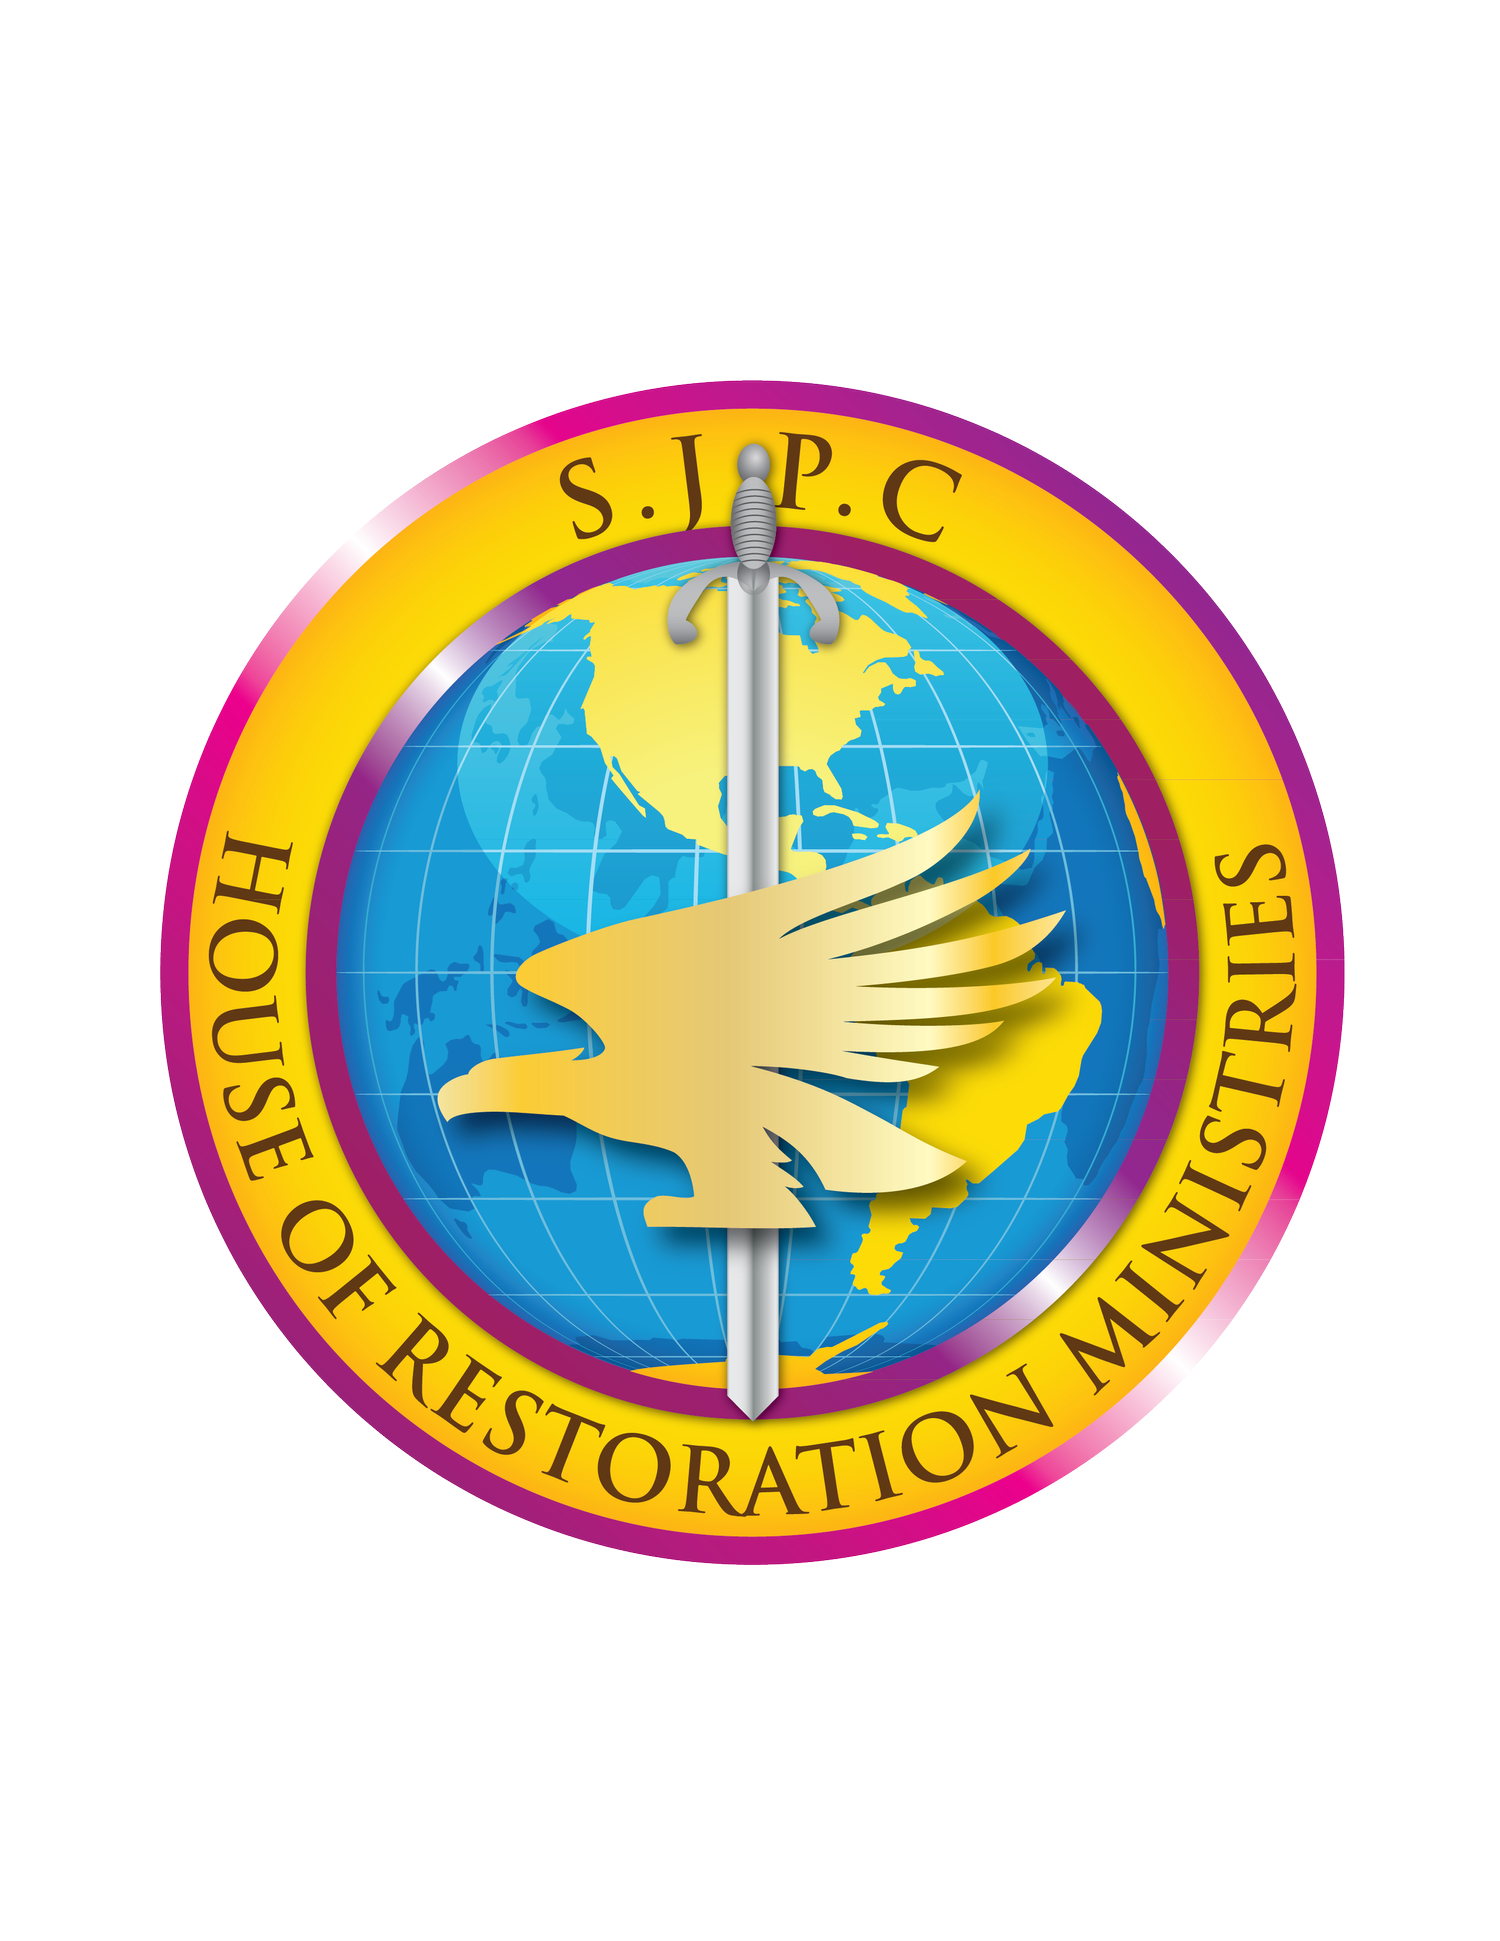 SJPC House of Restoration Ministries